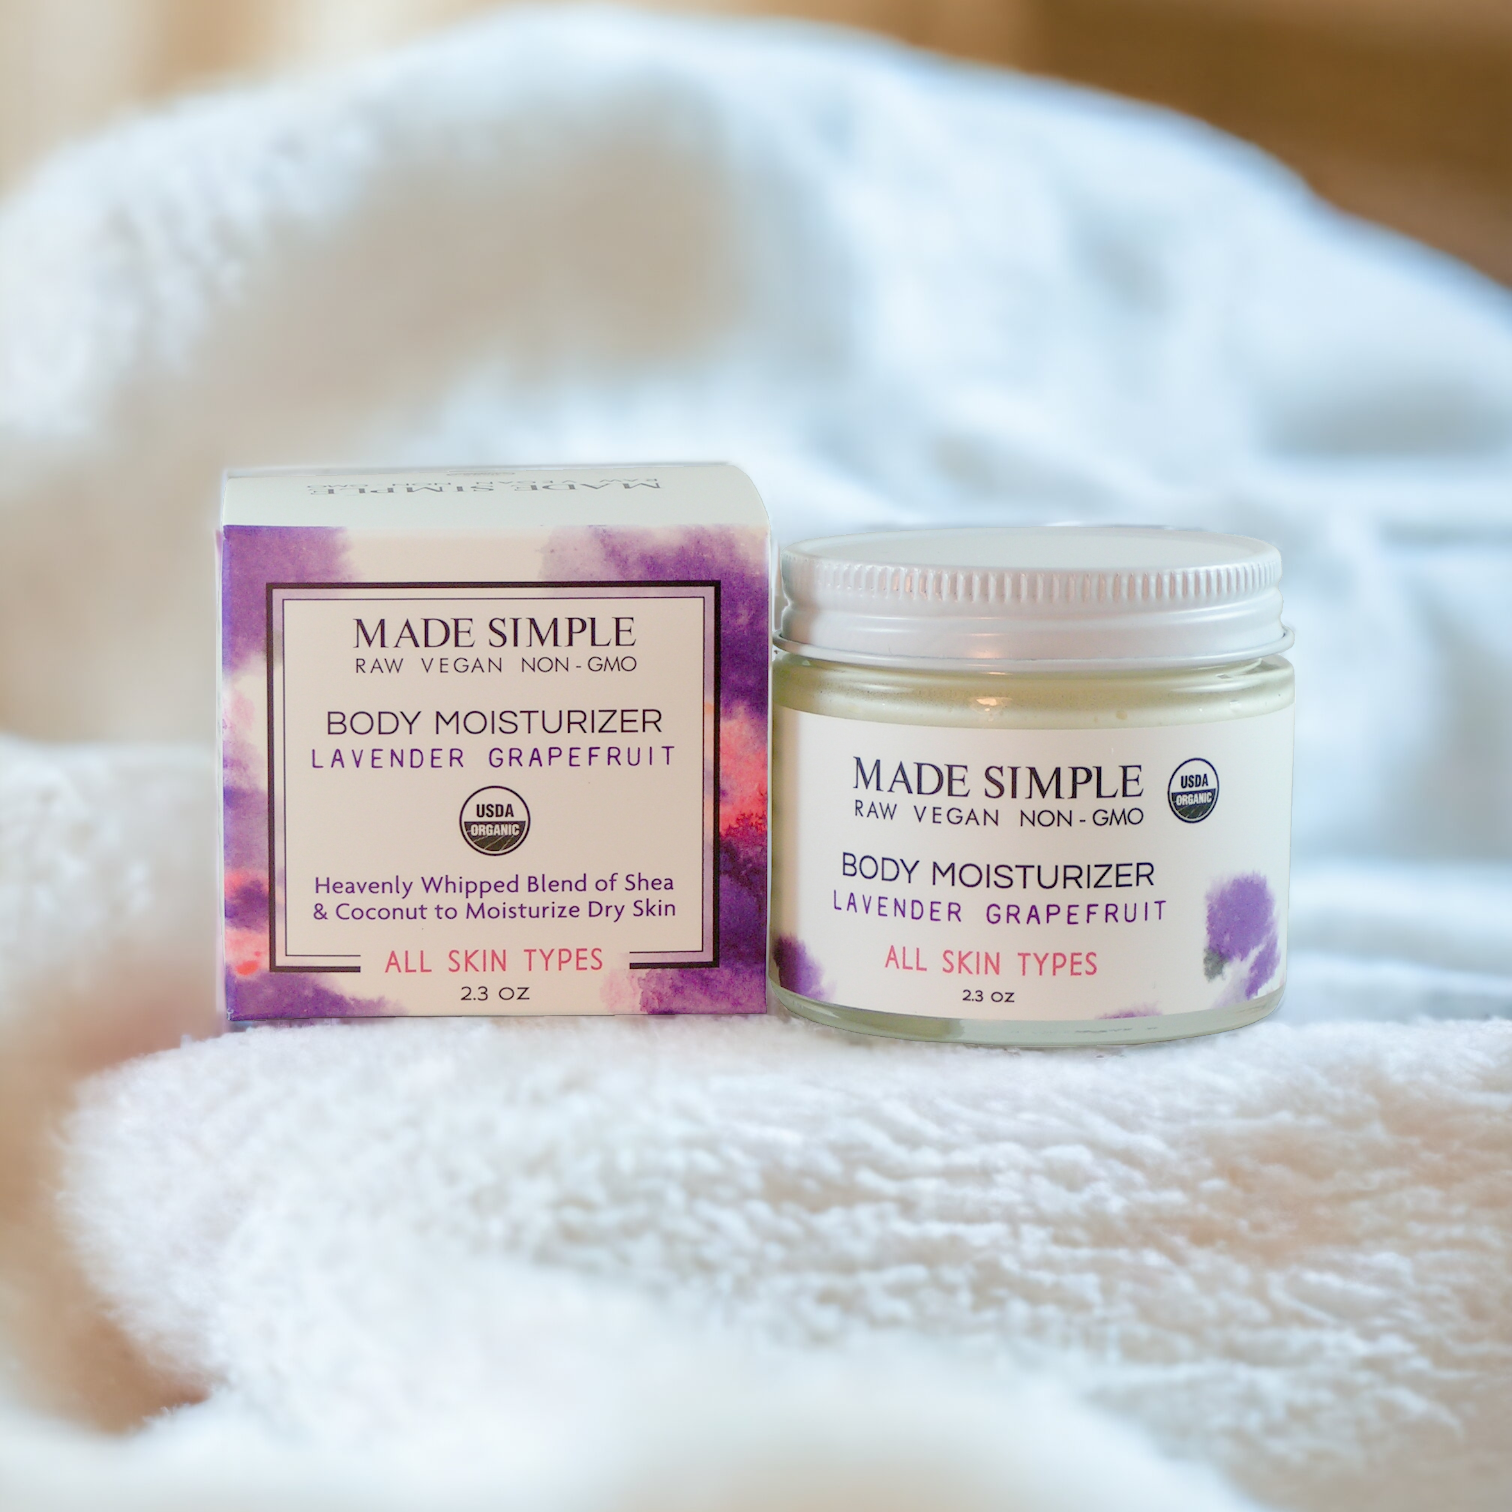 Made Simple Skin Care certified organic raw vegan nonGMO lavender grapefruit moisturizer